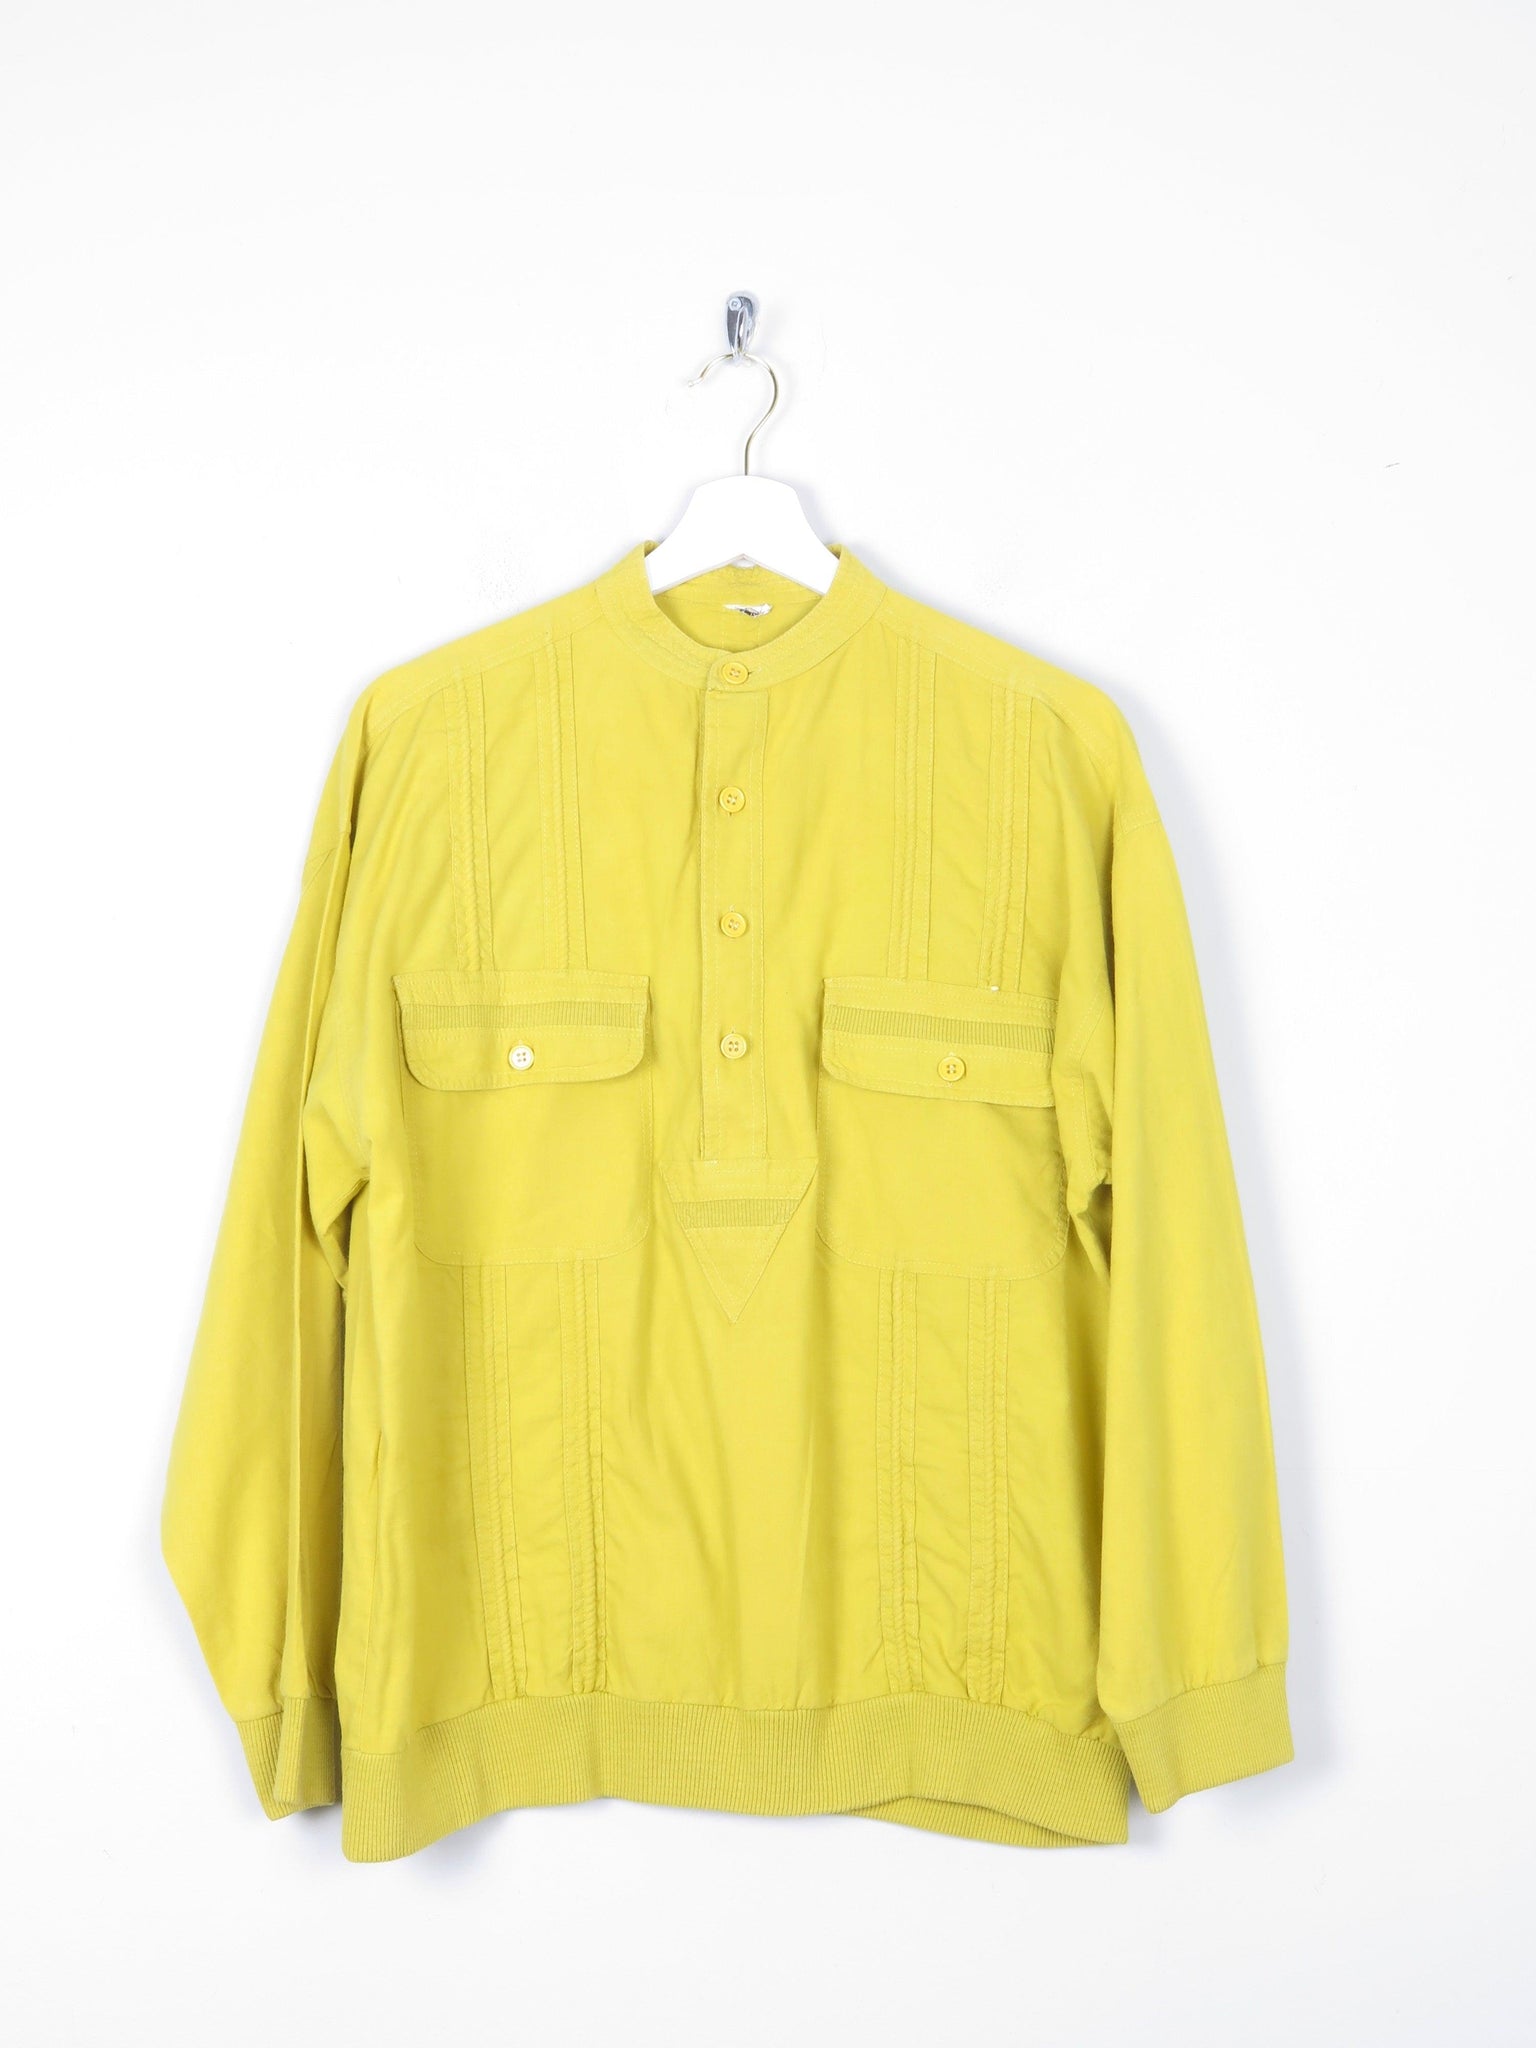 Women's Yellow/ Mustard 1980s Collarless Blouse/Jacket S - The Harlequin